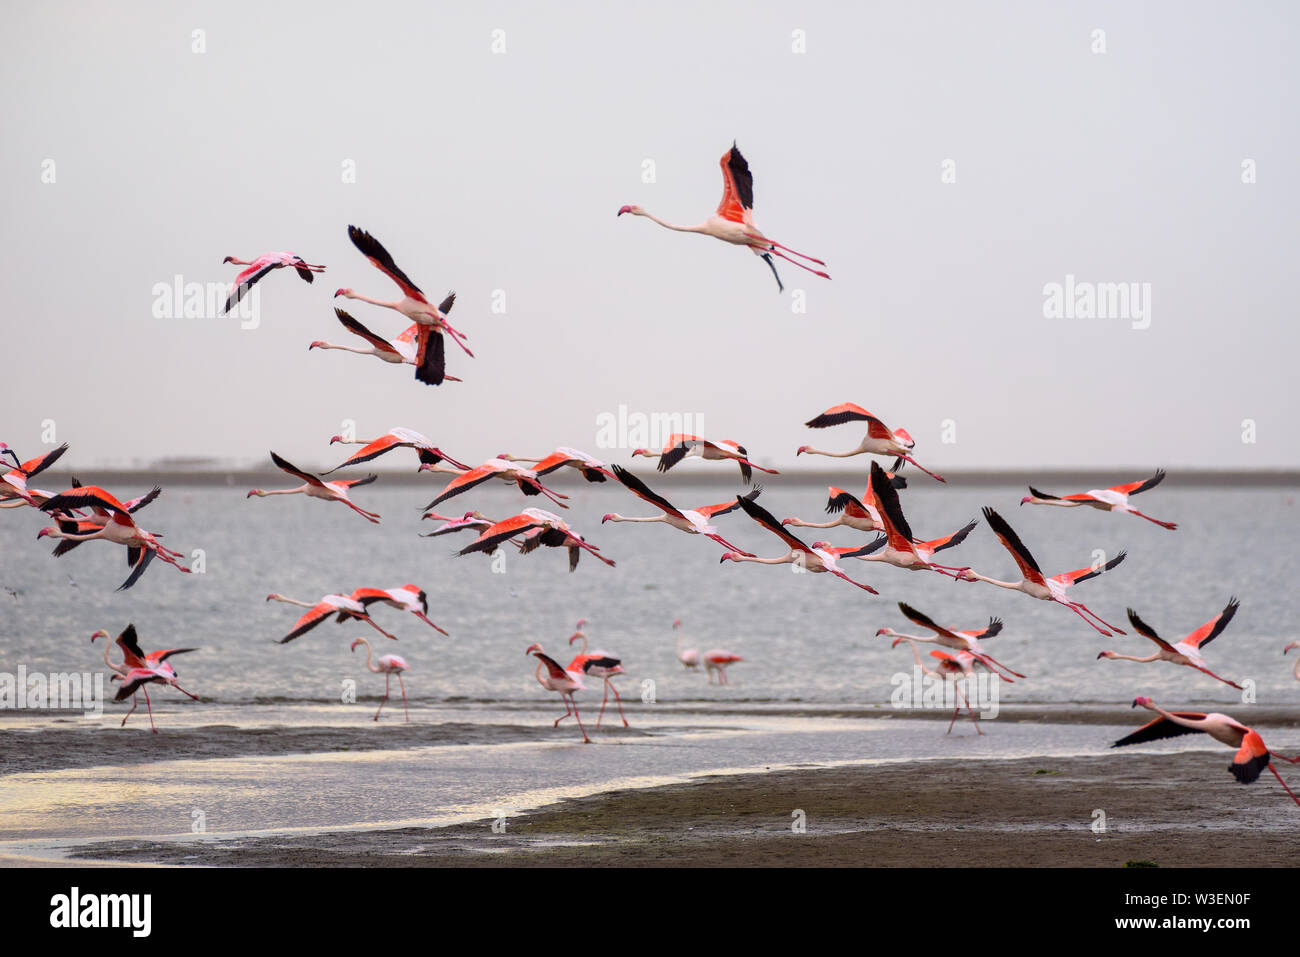 Large flock of pink flamingos in flight at Walvis Bay, Namibia Stock Photo